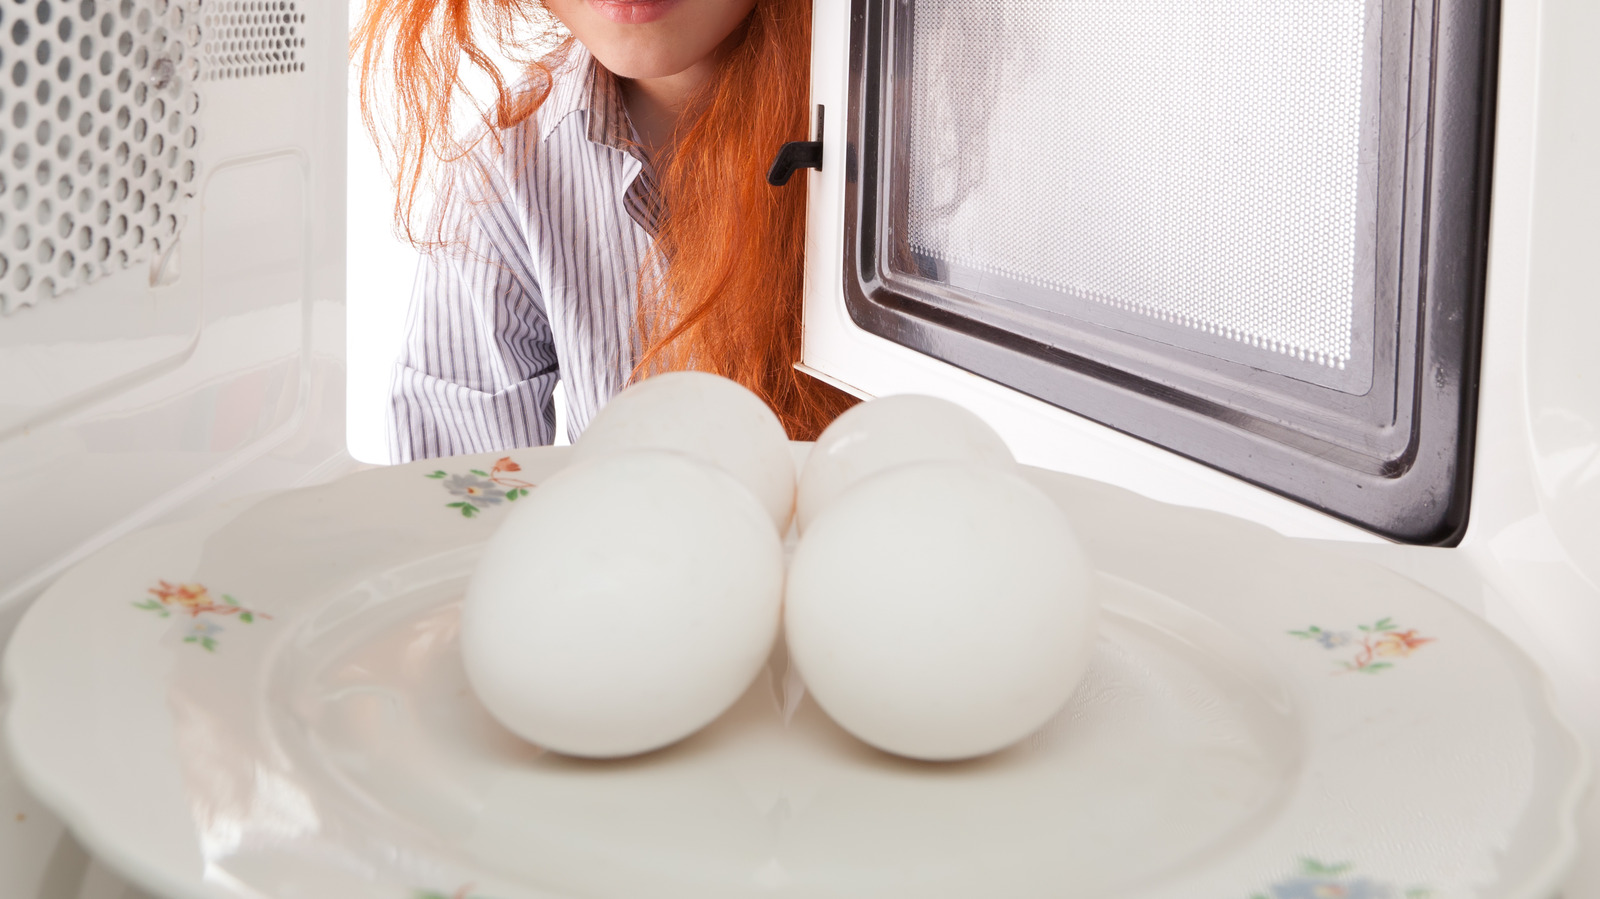 TikTok cook brutally reviews viral 'egg tube' gadget - 9Kitchen